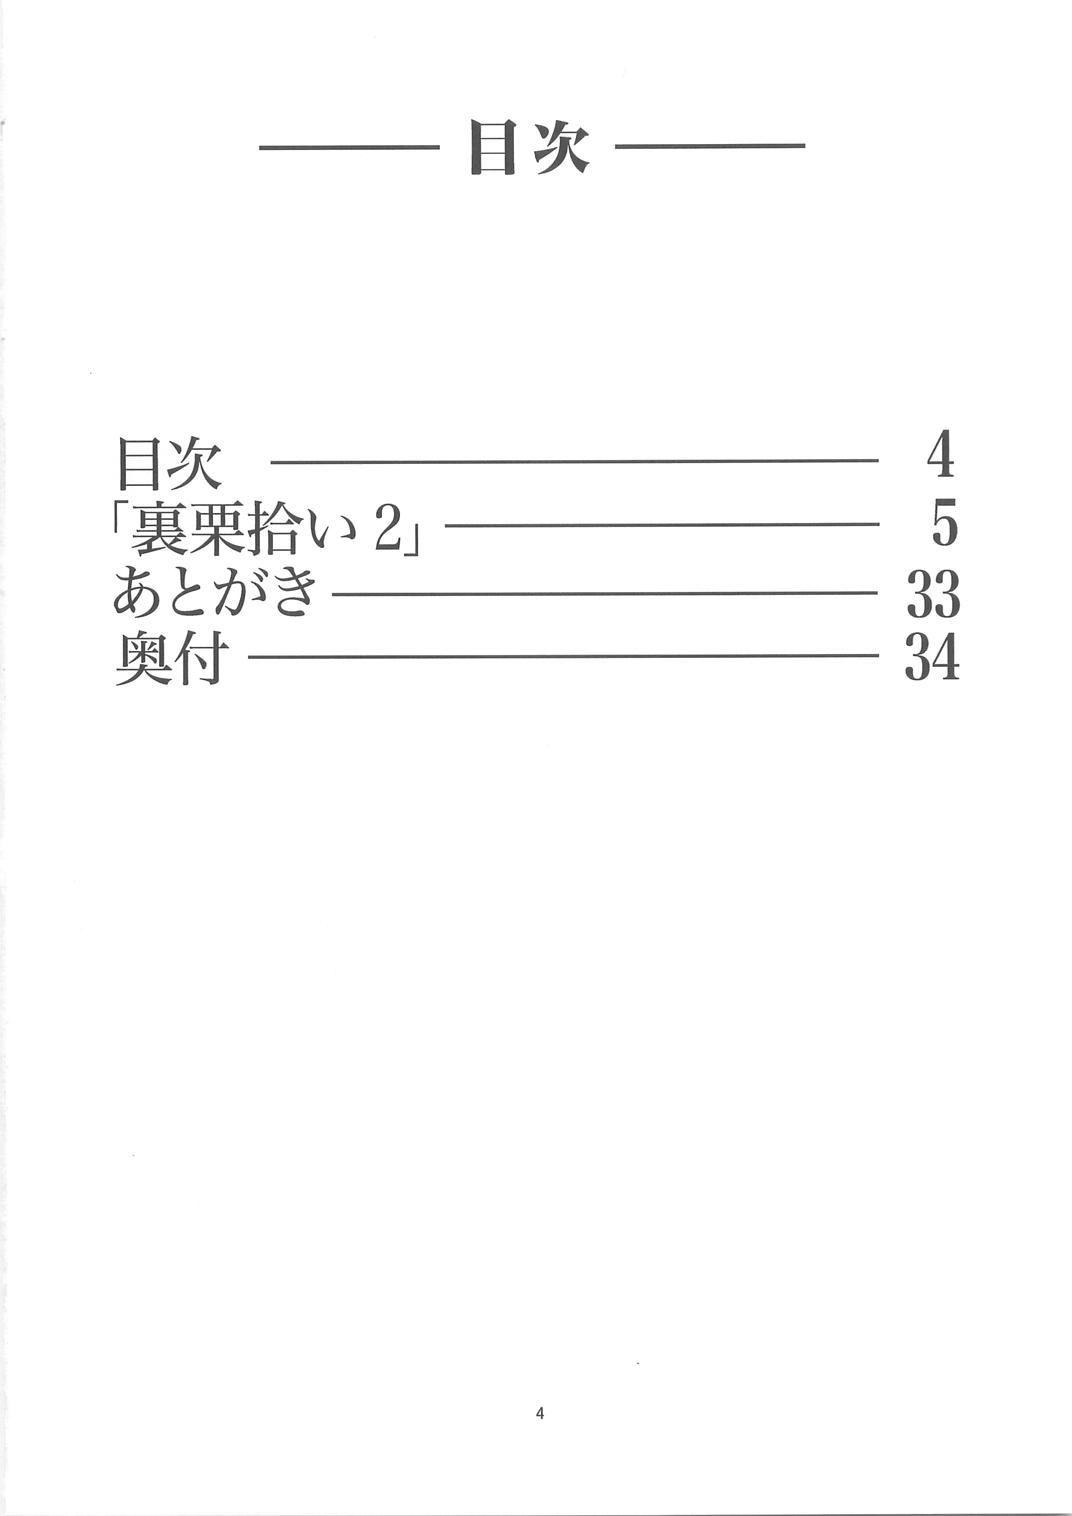 Straight Ura Kuri Hiroi 2 Boyfriend - Page 4